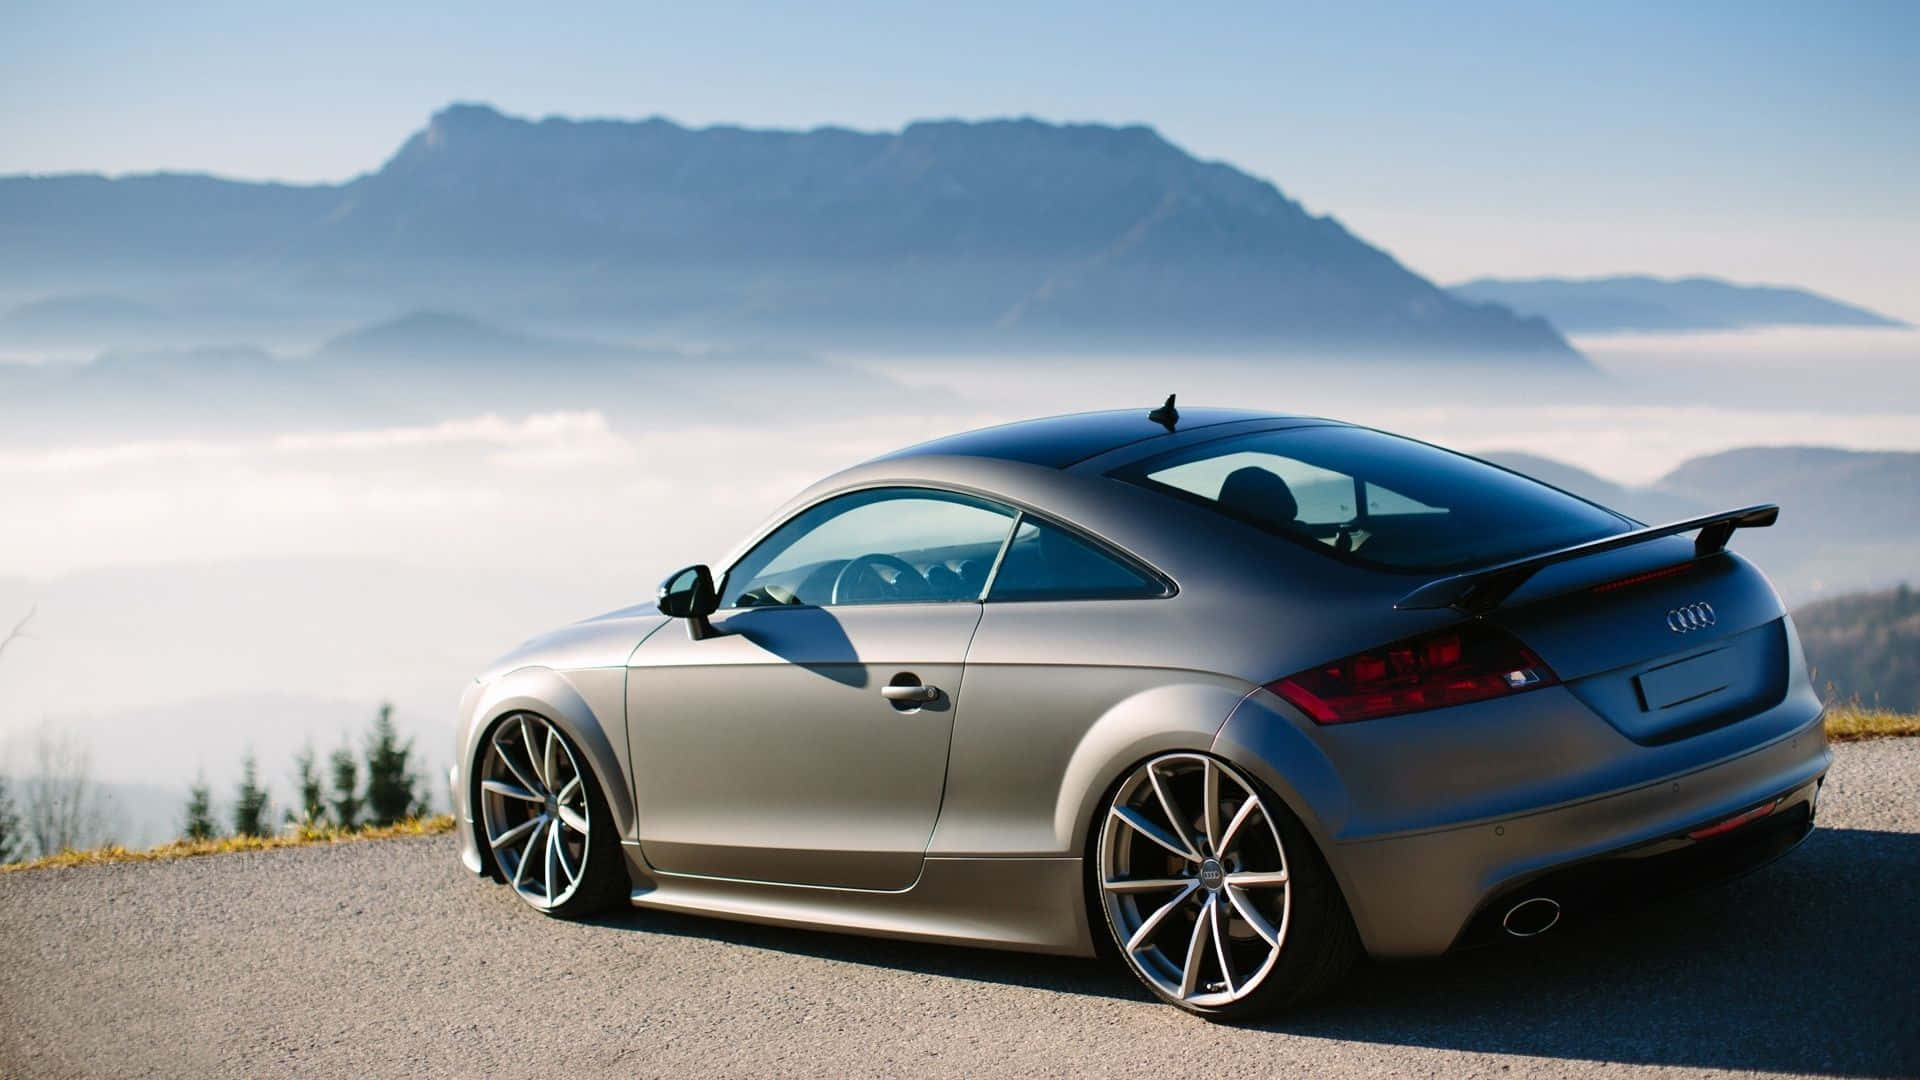 Captivating Audi TT in Scenic Landscape Wallpaper